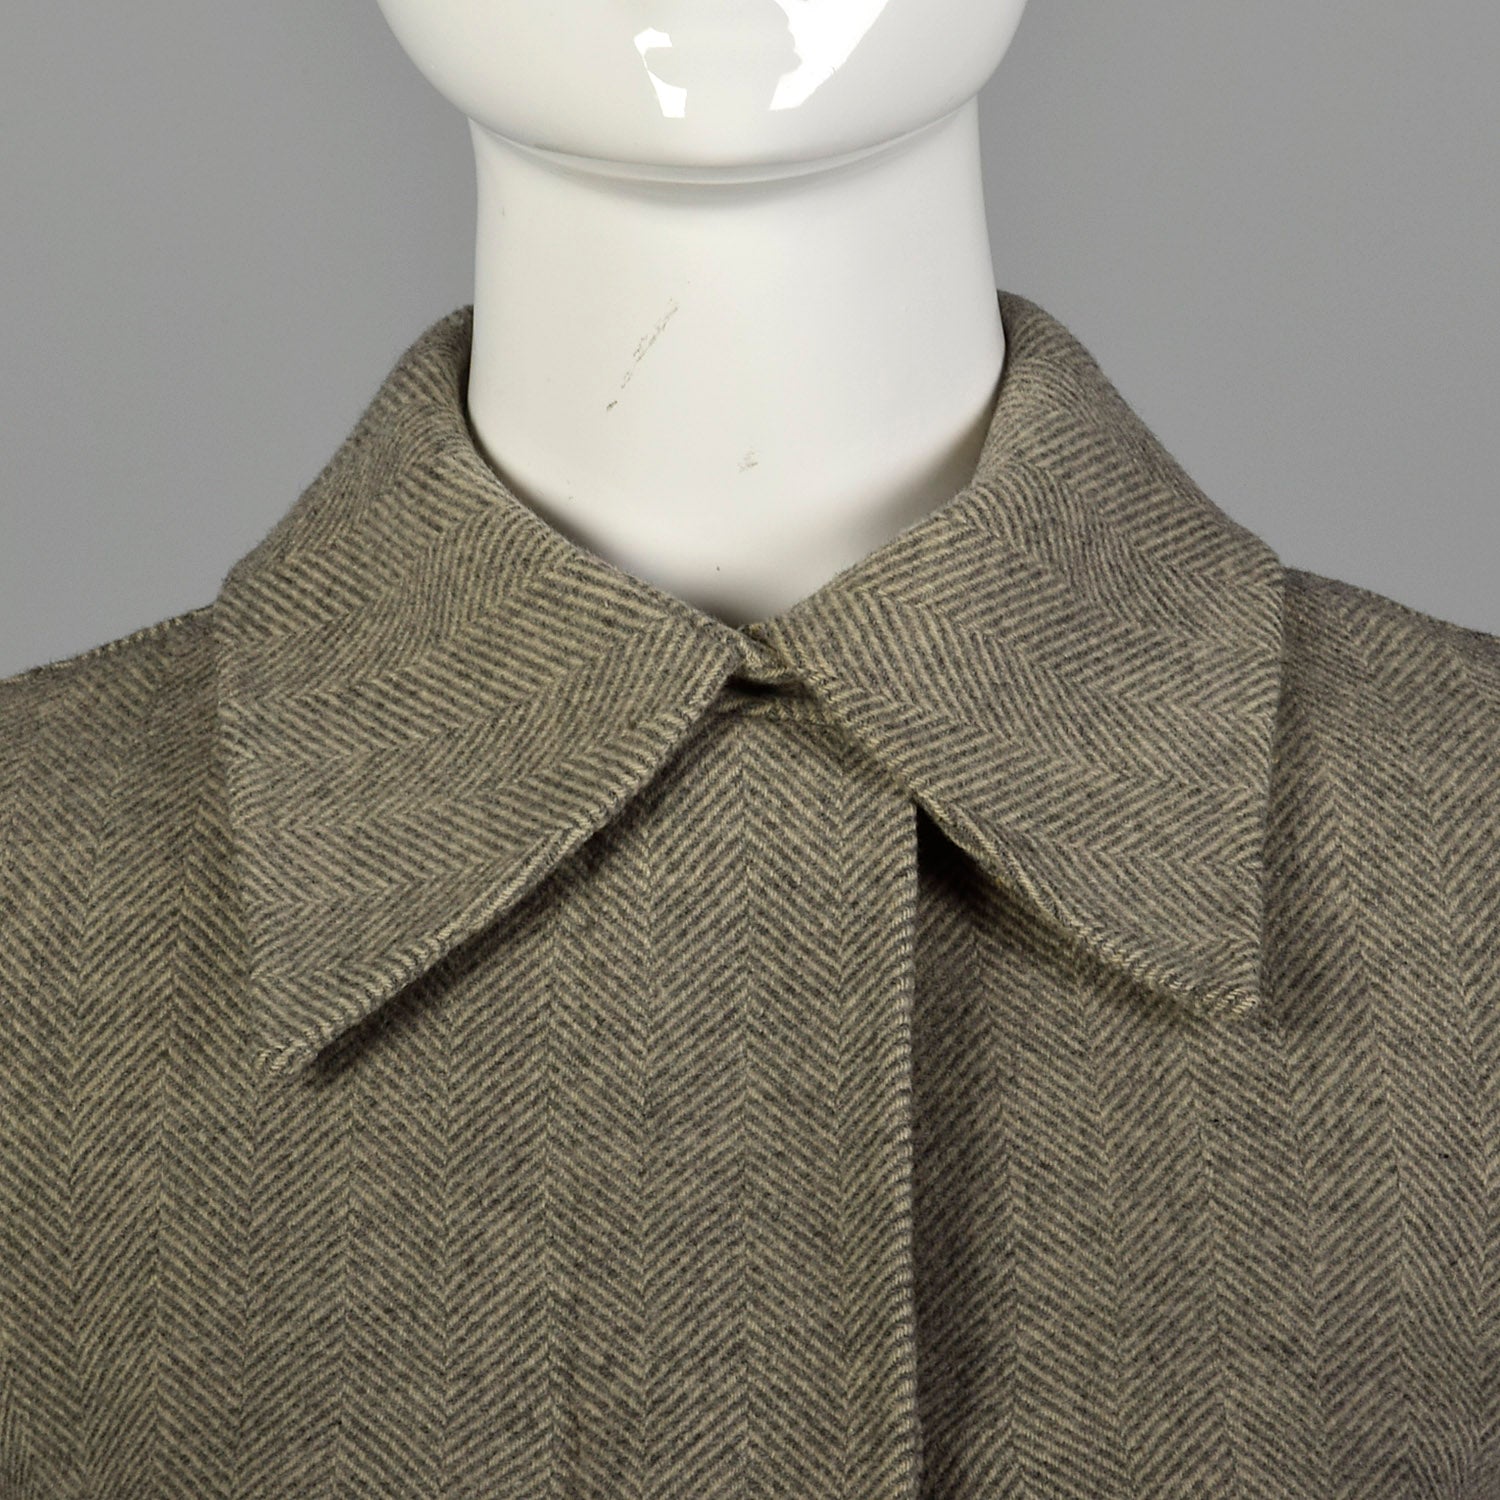 Bonwit Teller Gray and Ivory Herringbone Coat